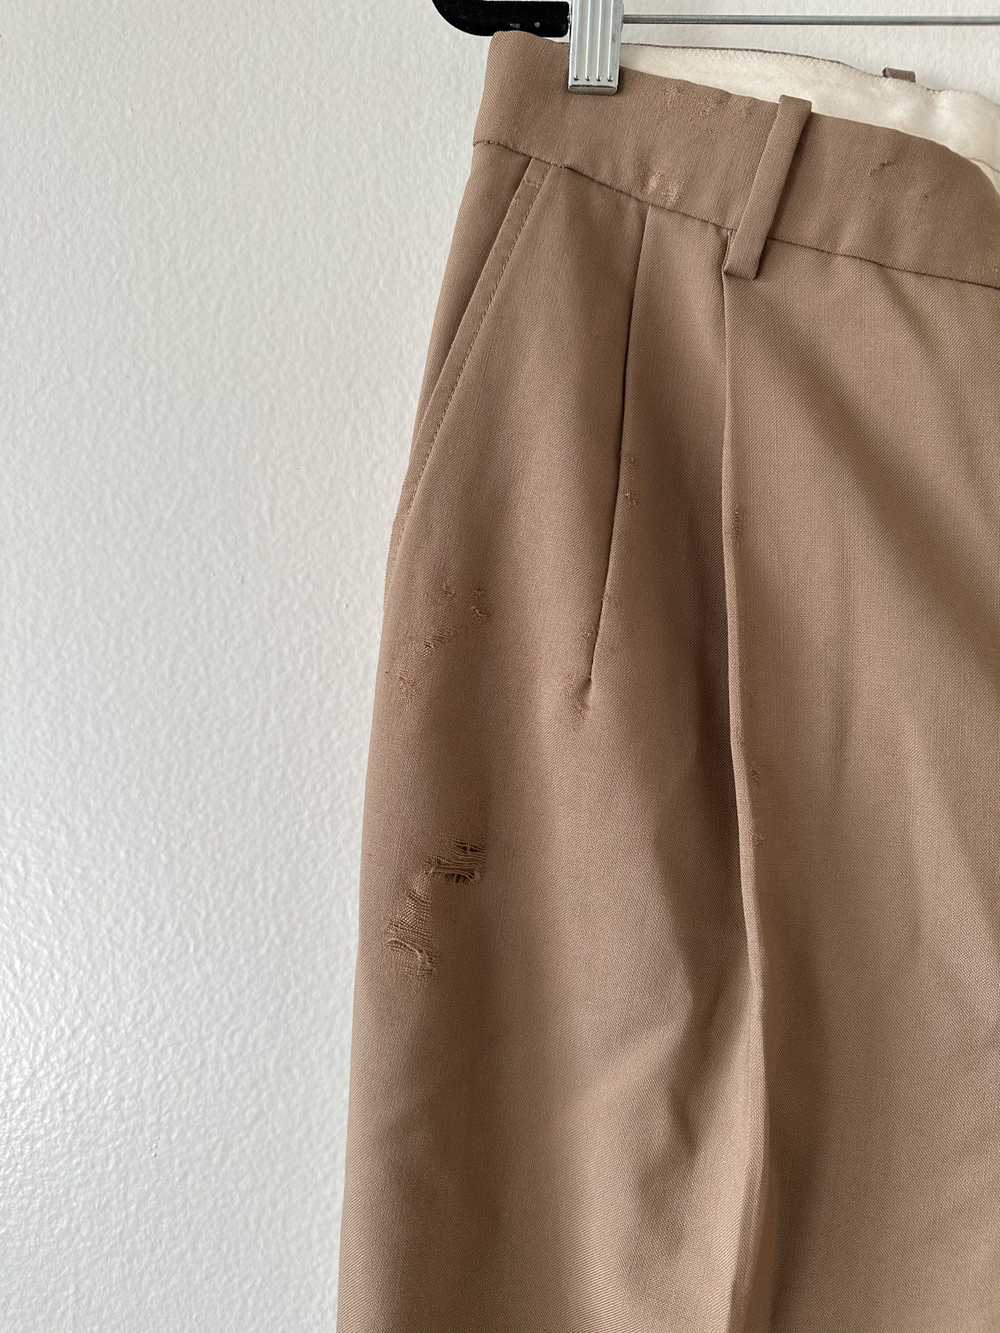 Marni Marni Pleated Trousers - image 3